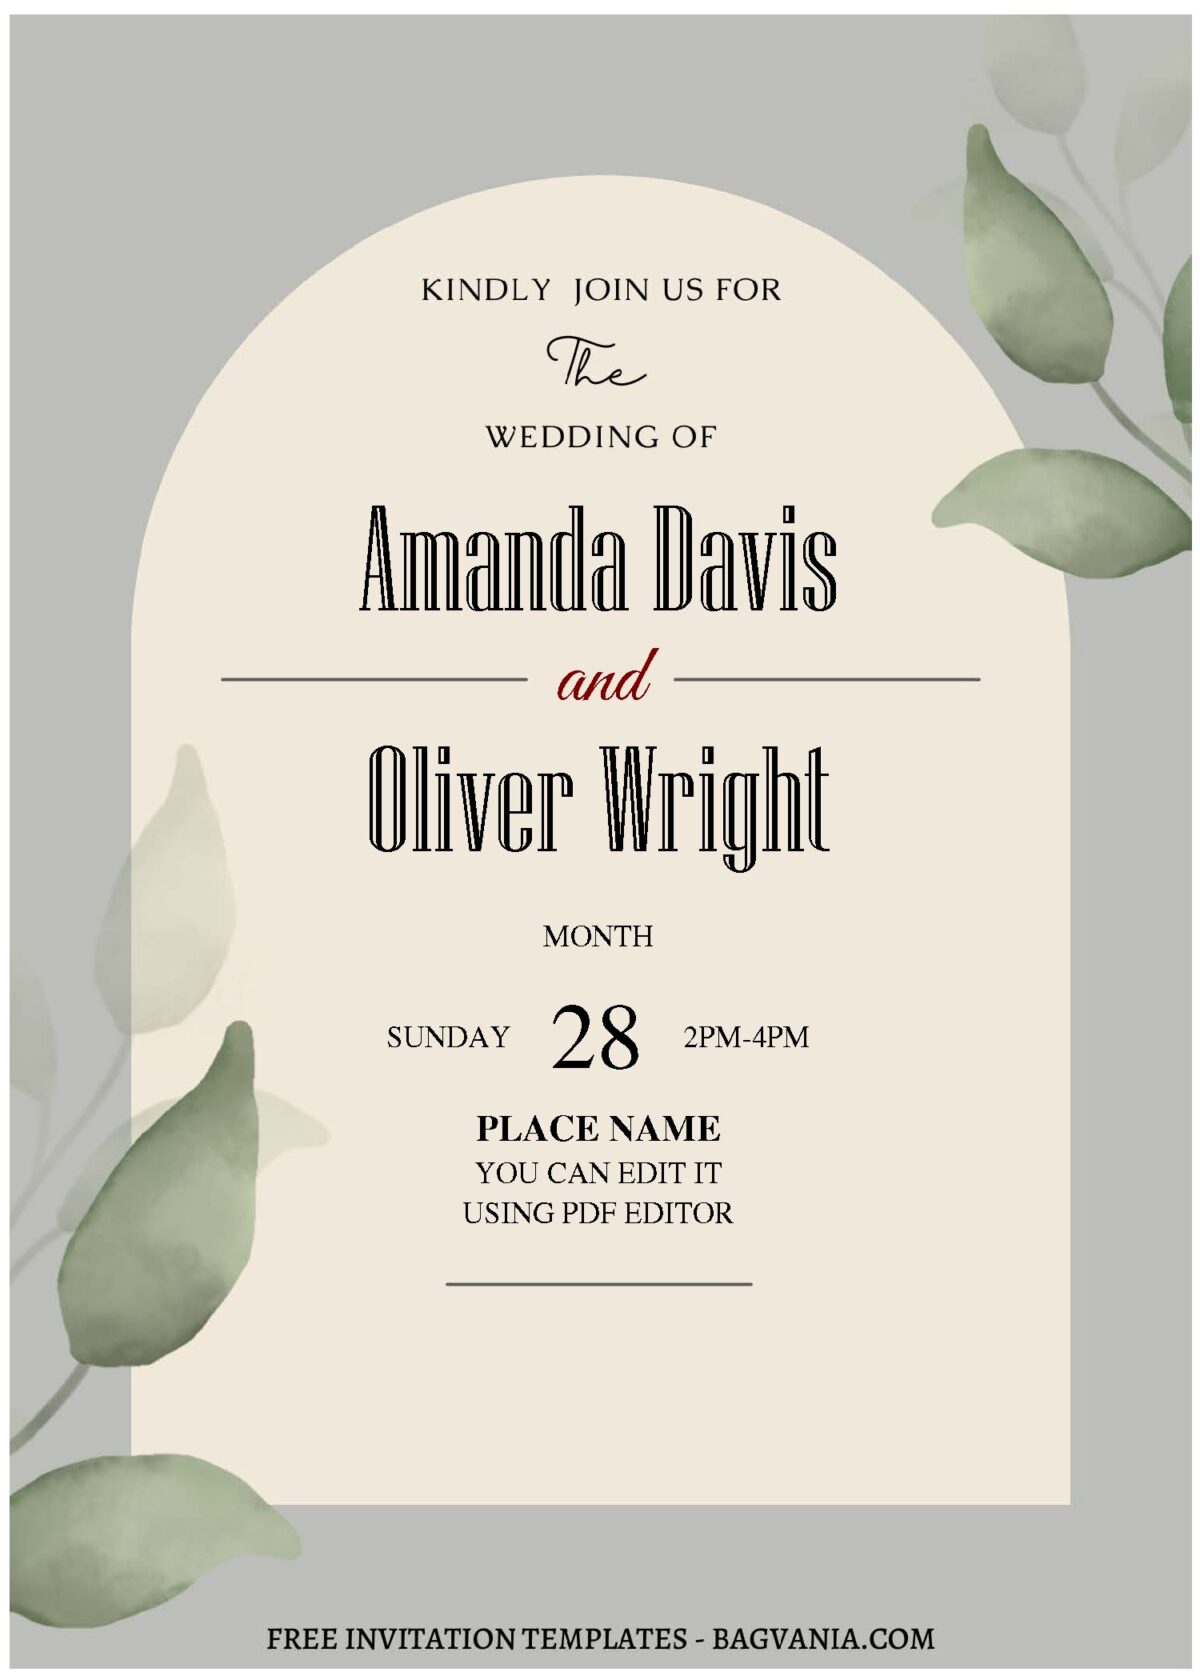 (Free Editable PDF) Classy Watercolor Eucalyptus Wedding Invitation Templates with greenery foliage